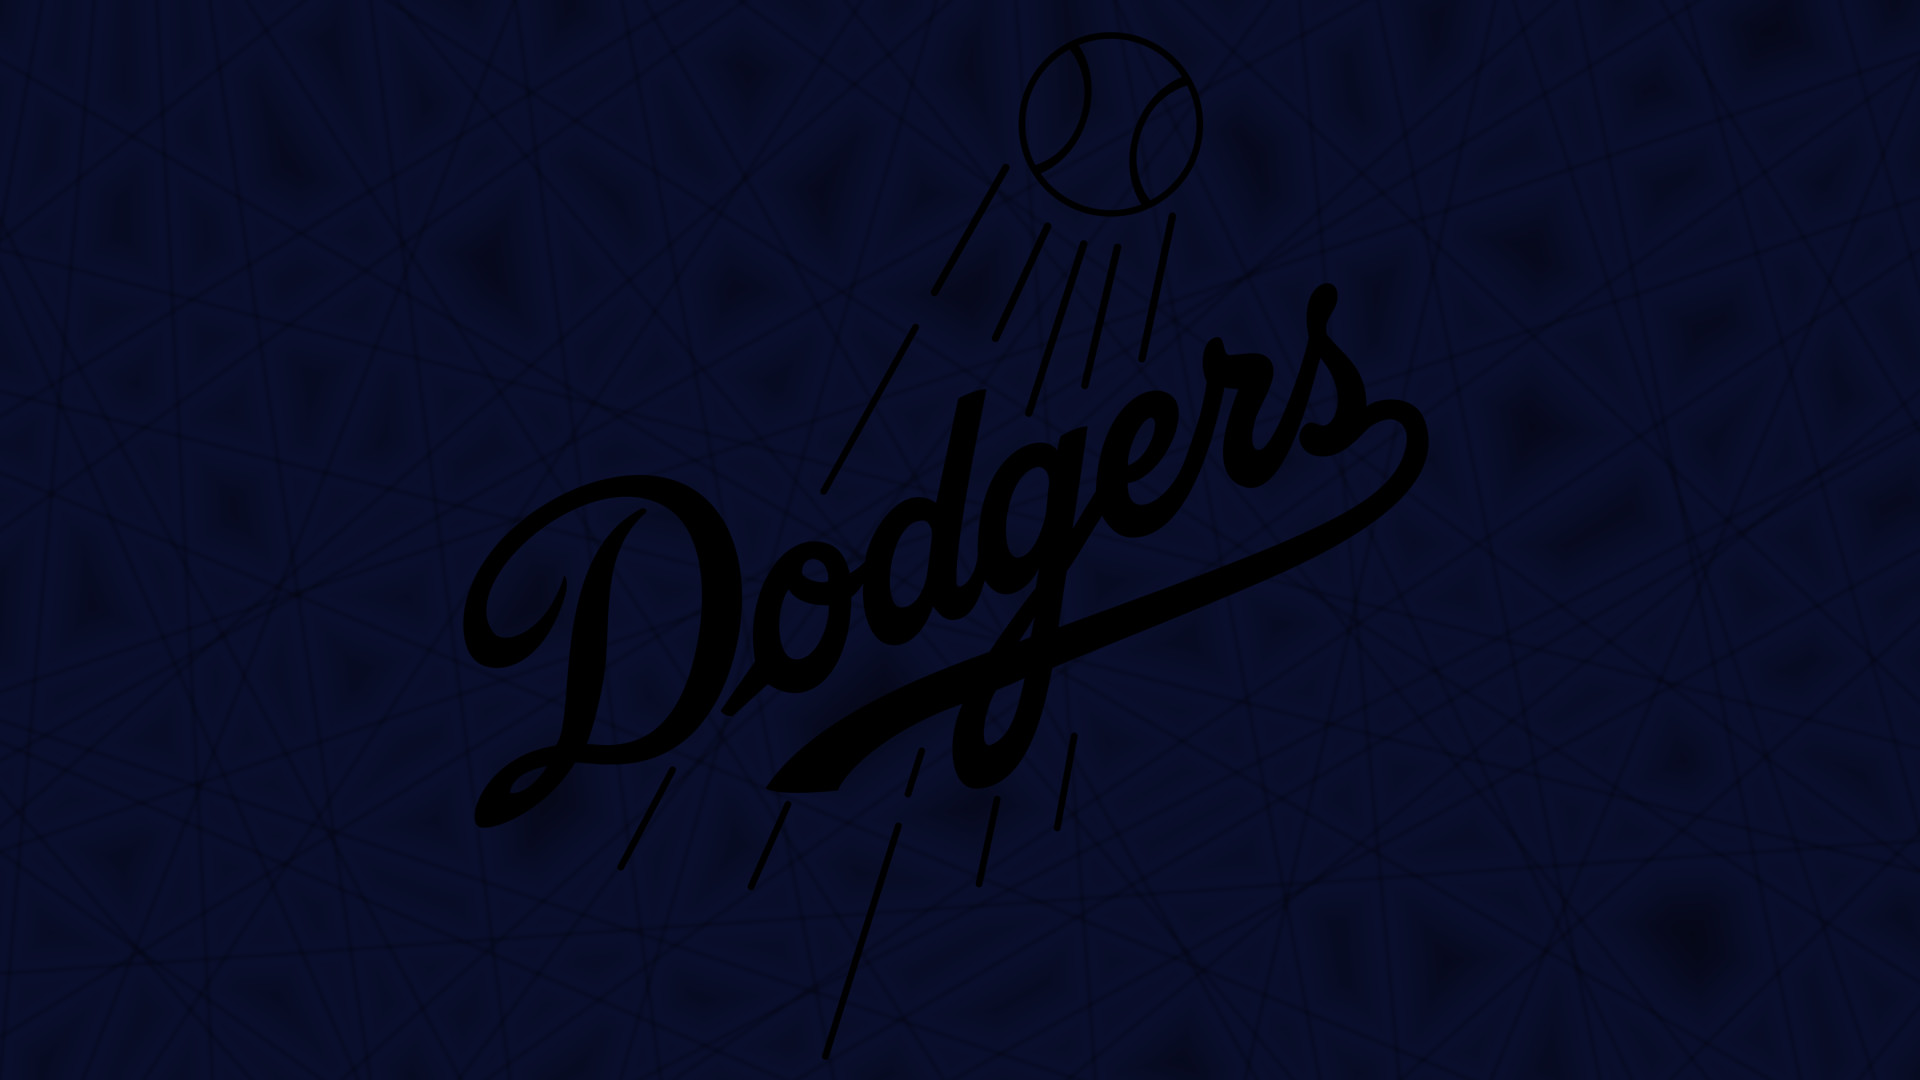 Dodgers HD wallpapers